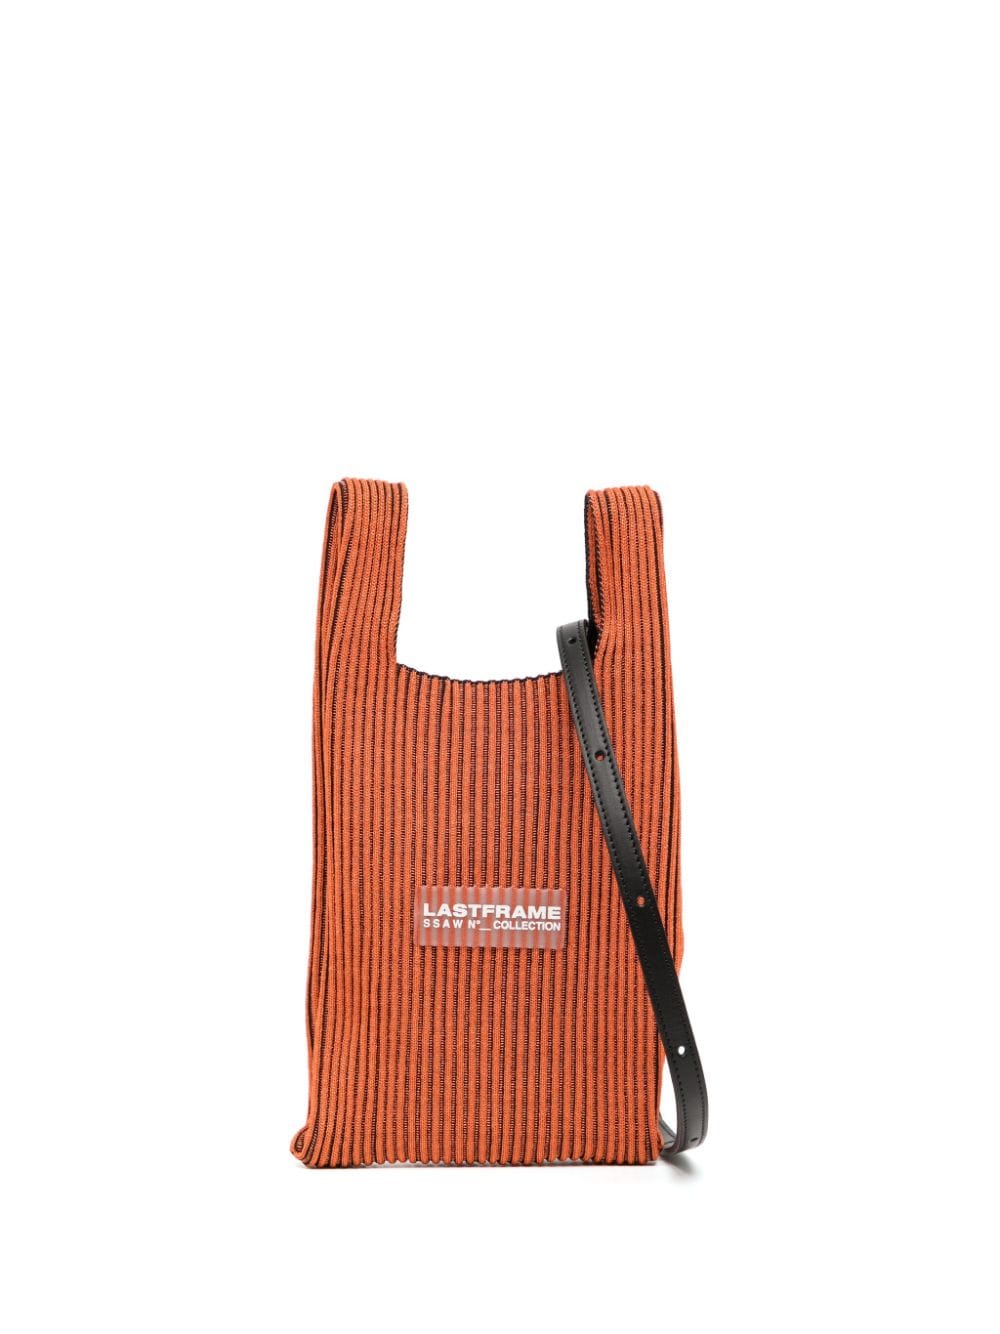 LASTFRAME mini Market knitted crossbody bag - Orange von LASTFRAME